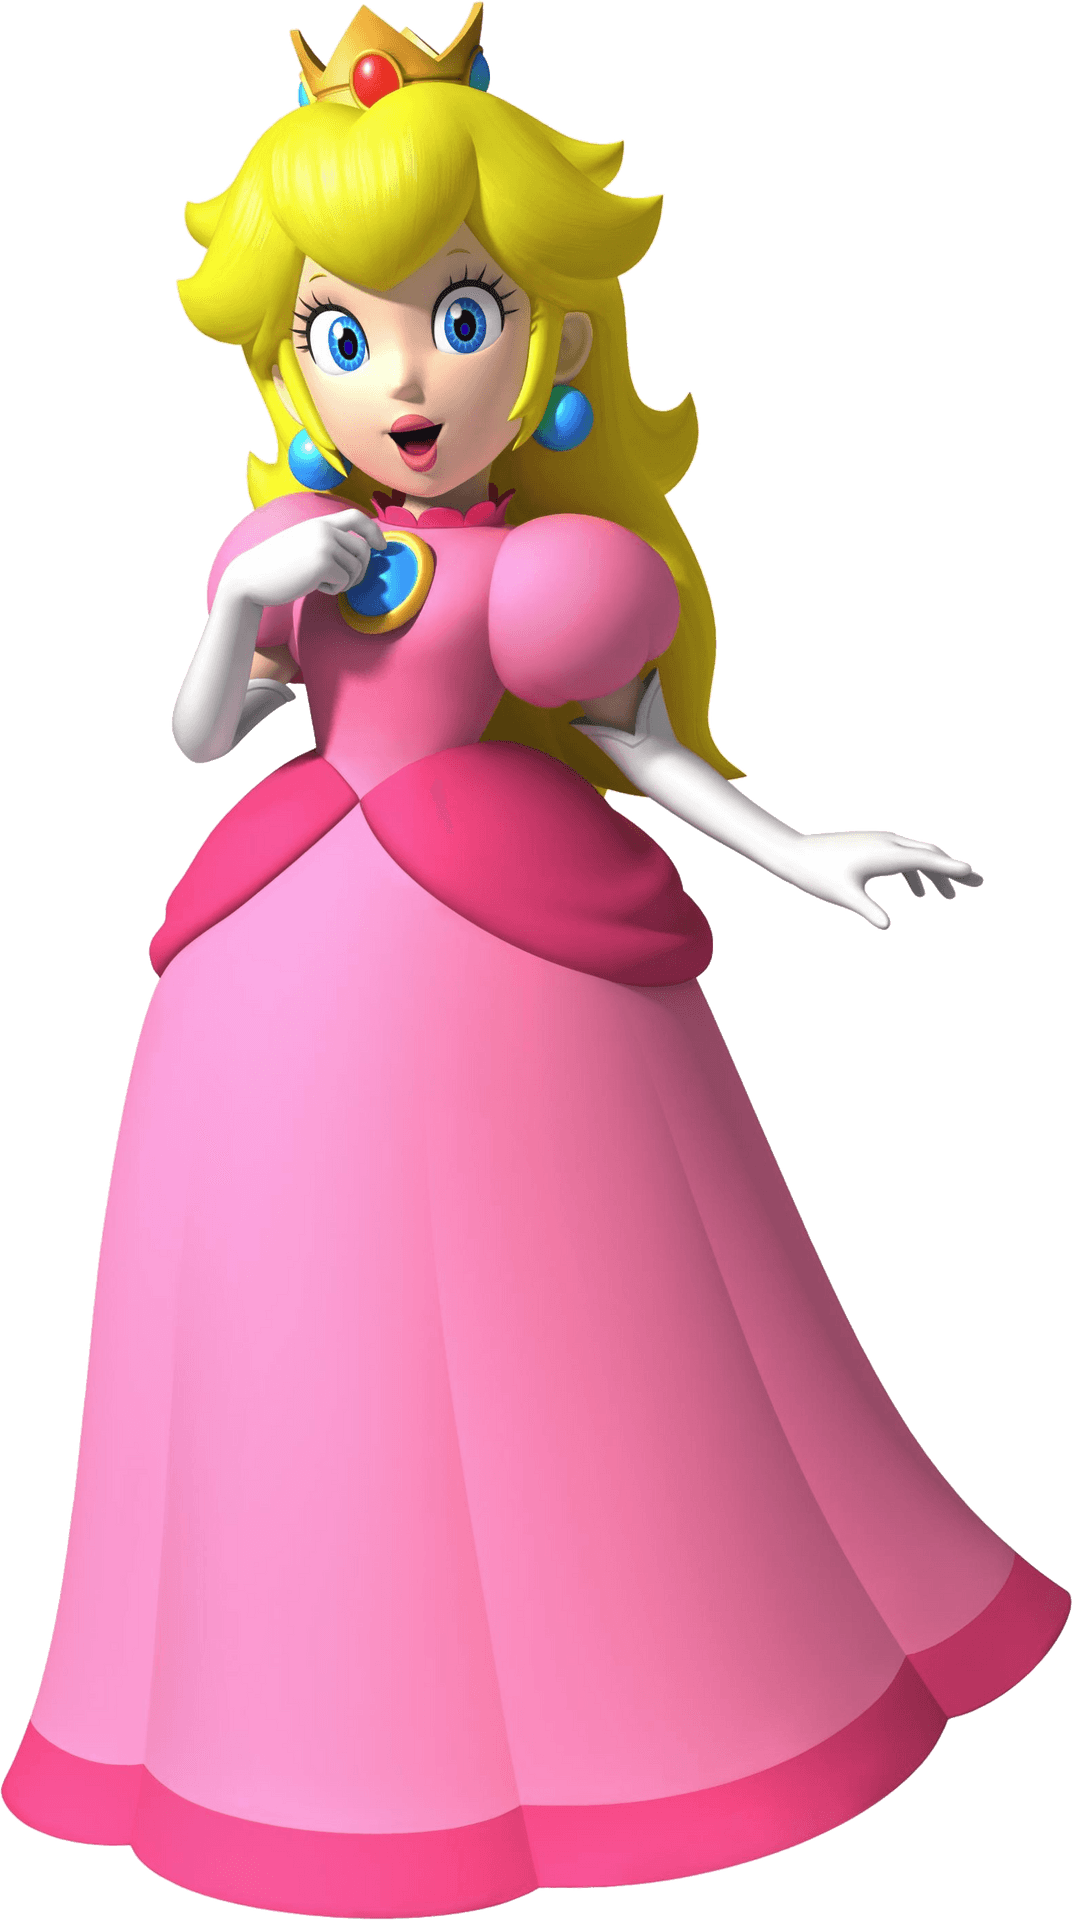 Download Princess Peach Mario Series | Wallpapers.com